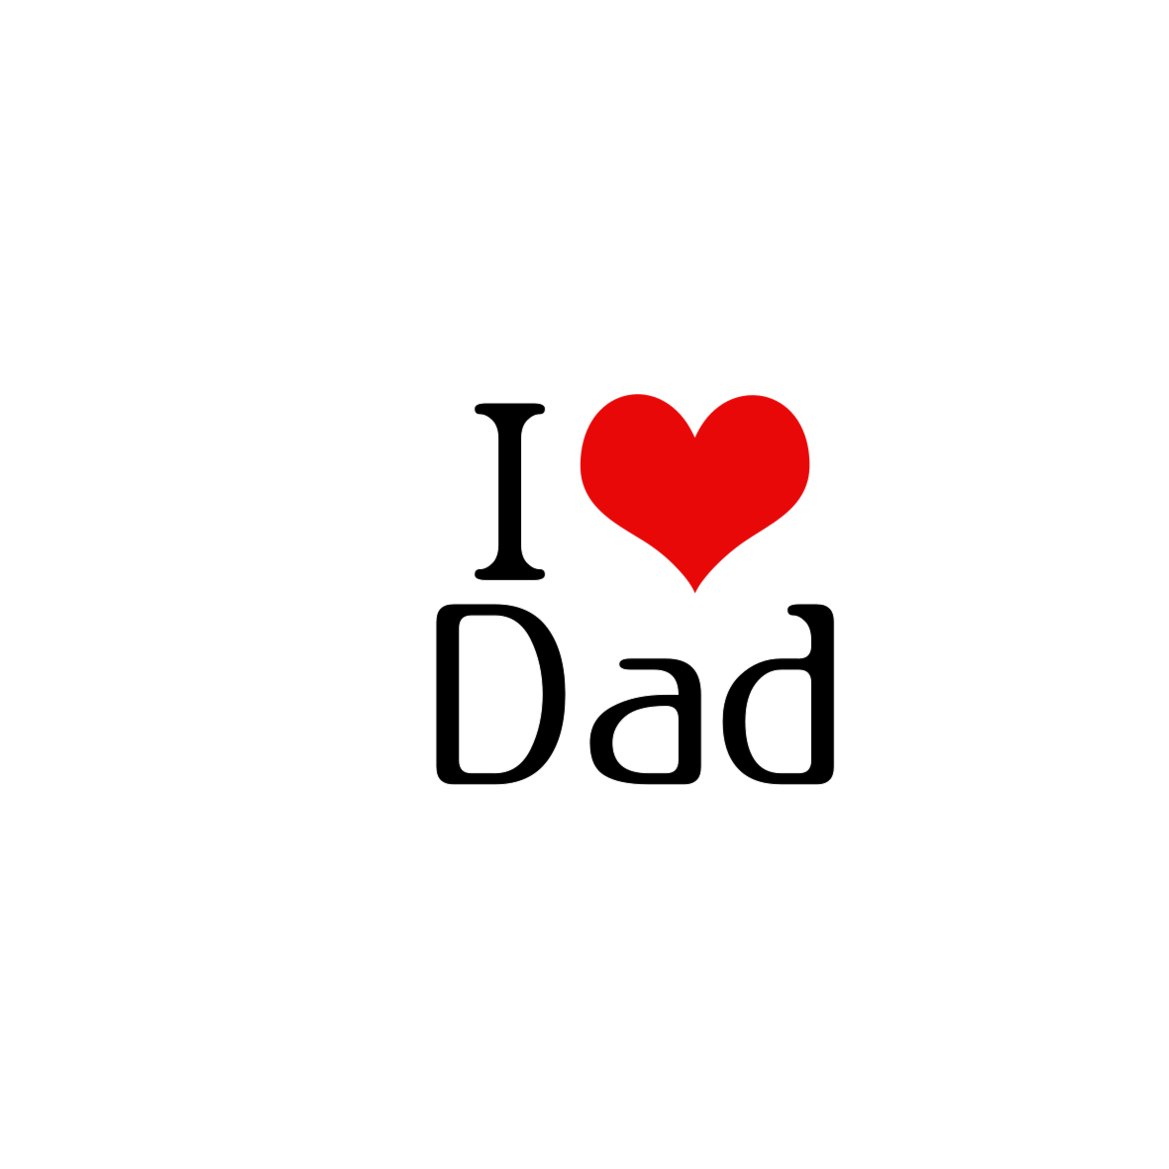 i love dad on Photo Magnet | Round Shape | Personalized Photo ...